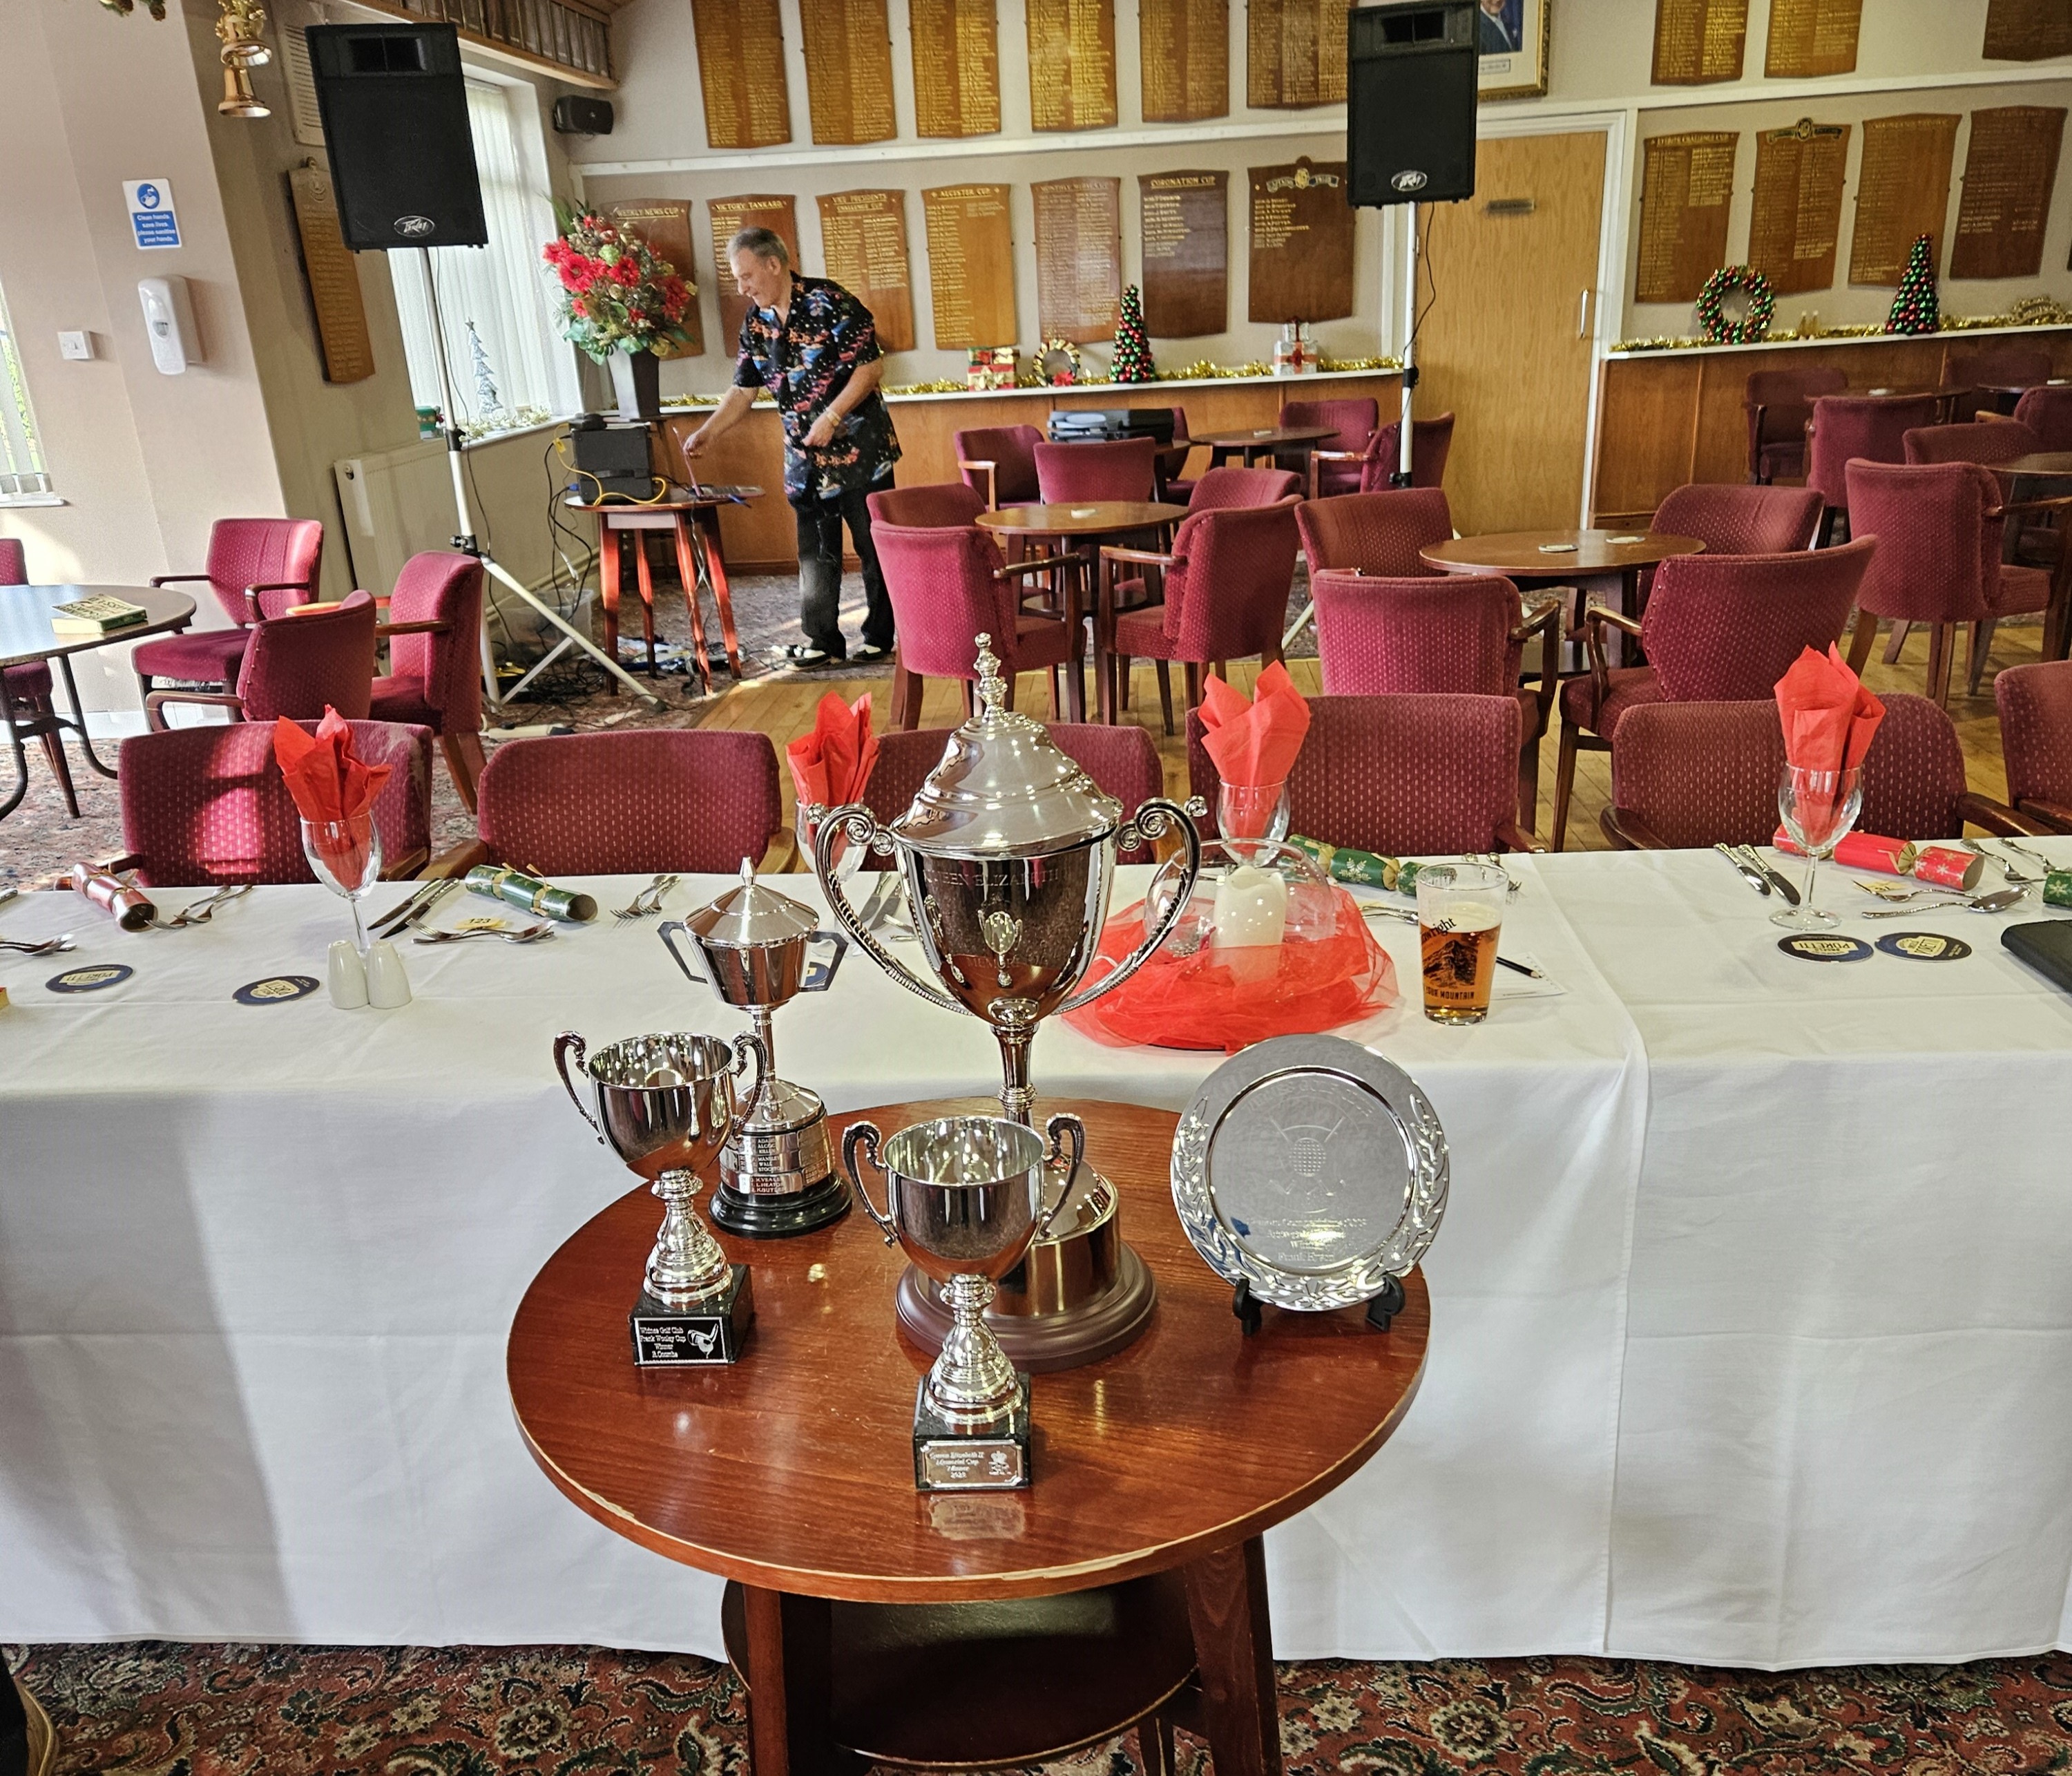 Trophys with Seniors memorial not shown